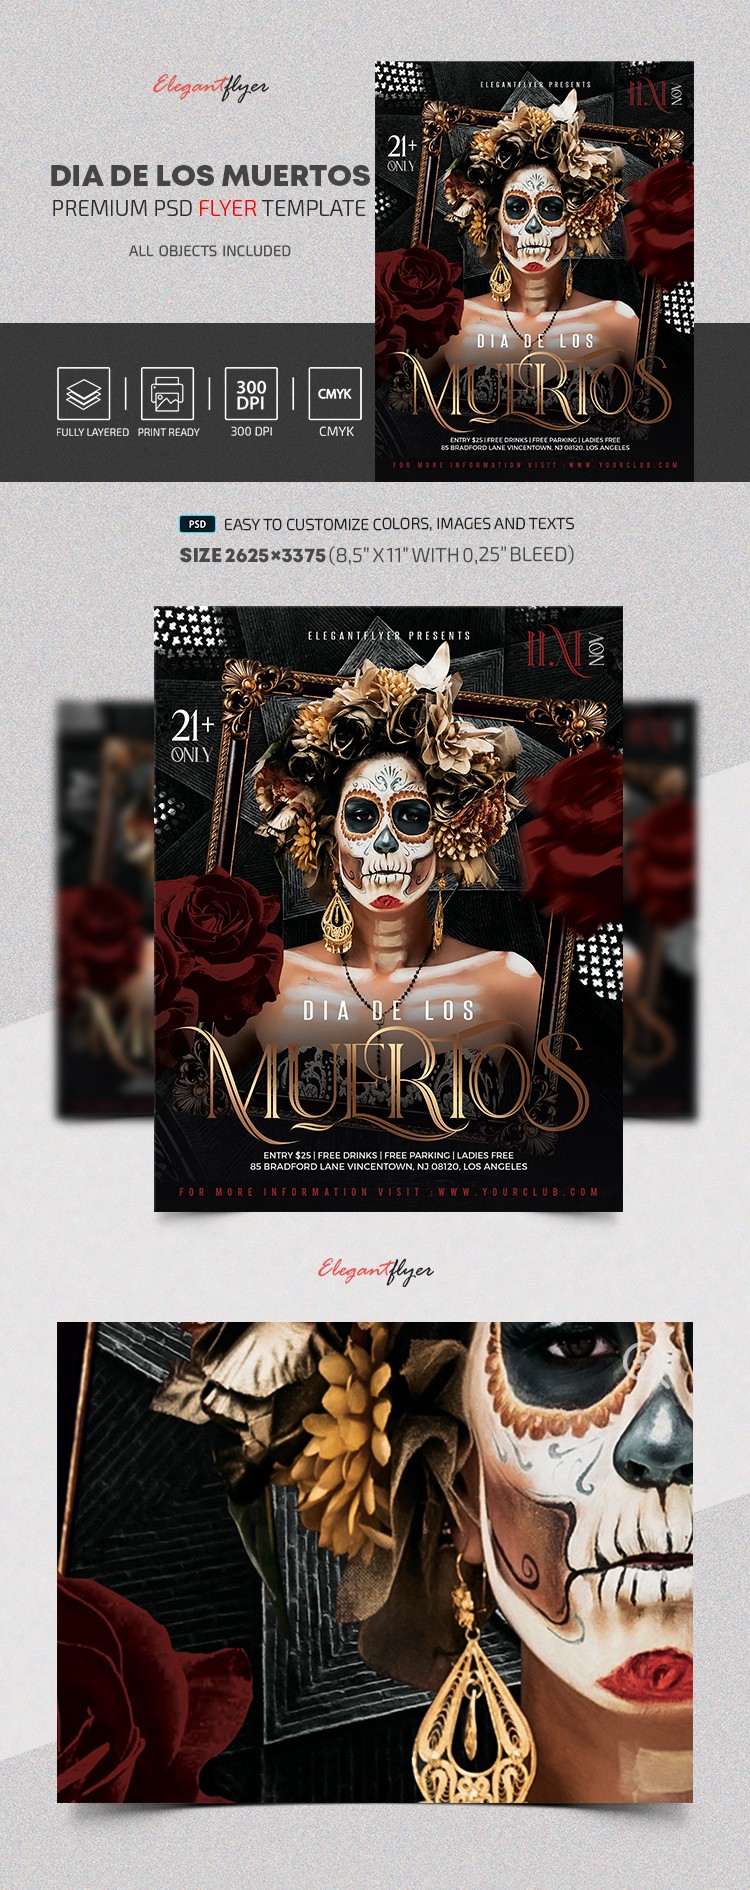 Plakat Dia de los Muertos by ElegantFlyer